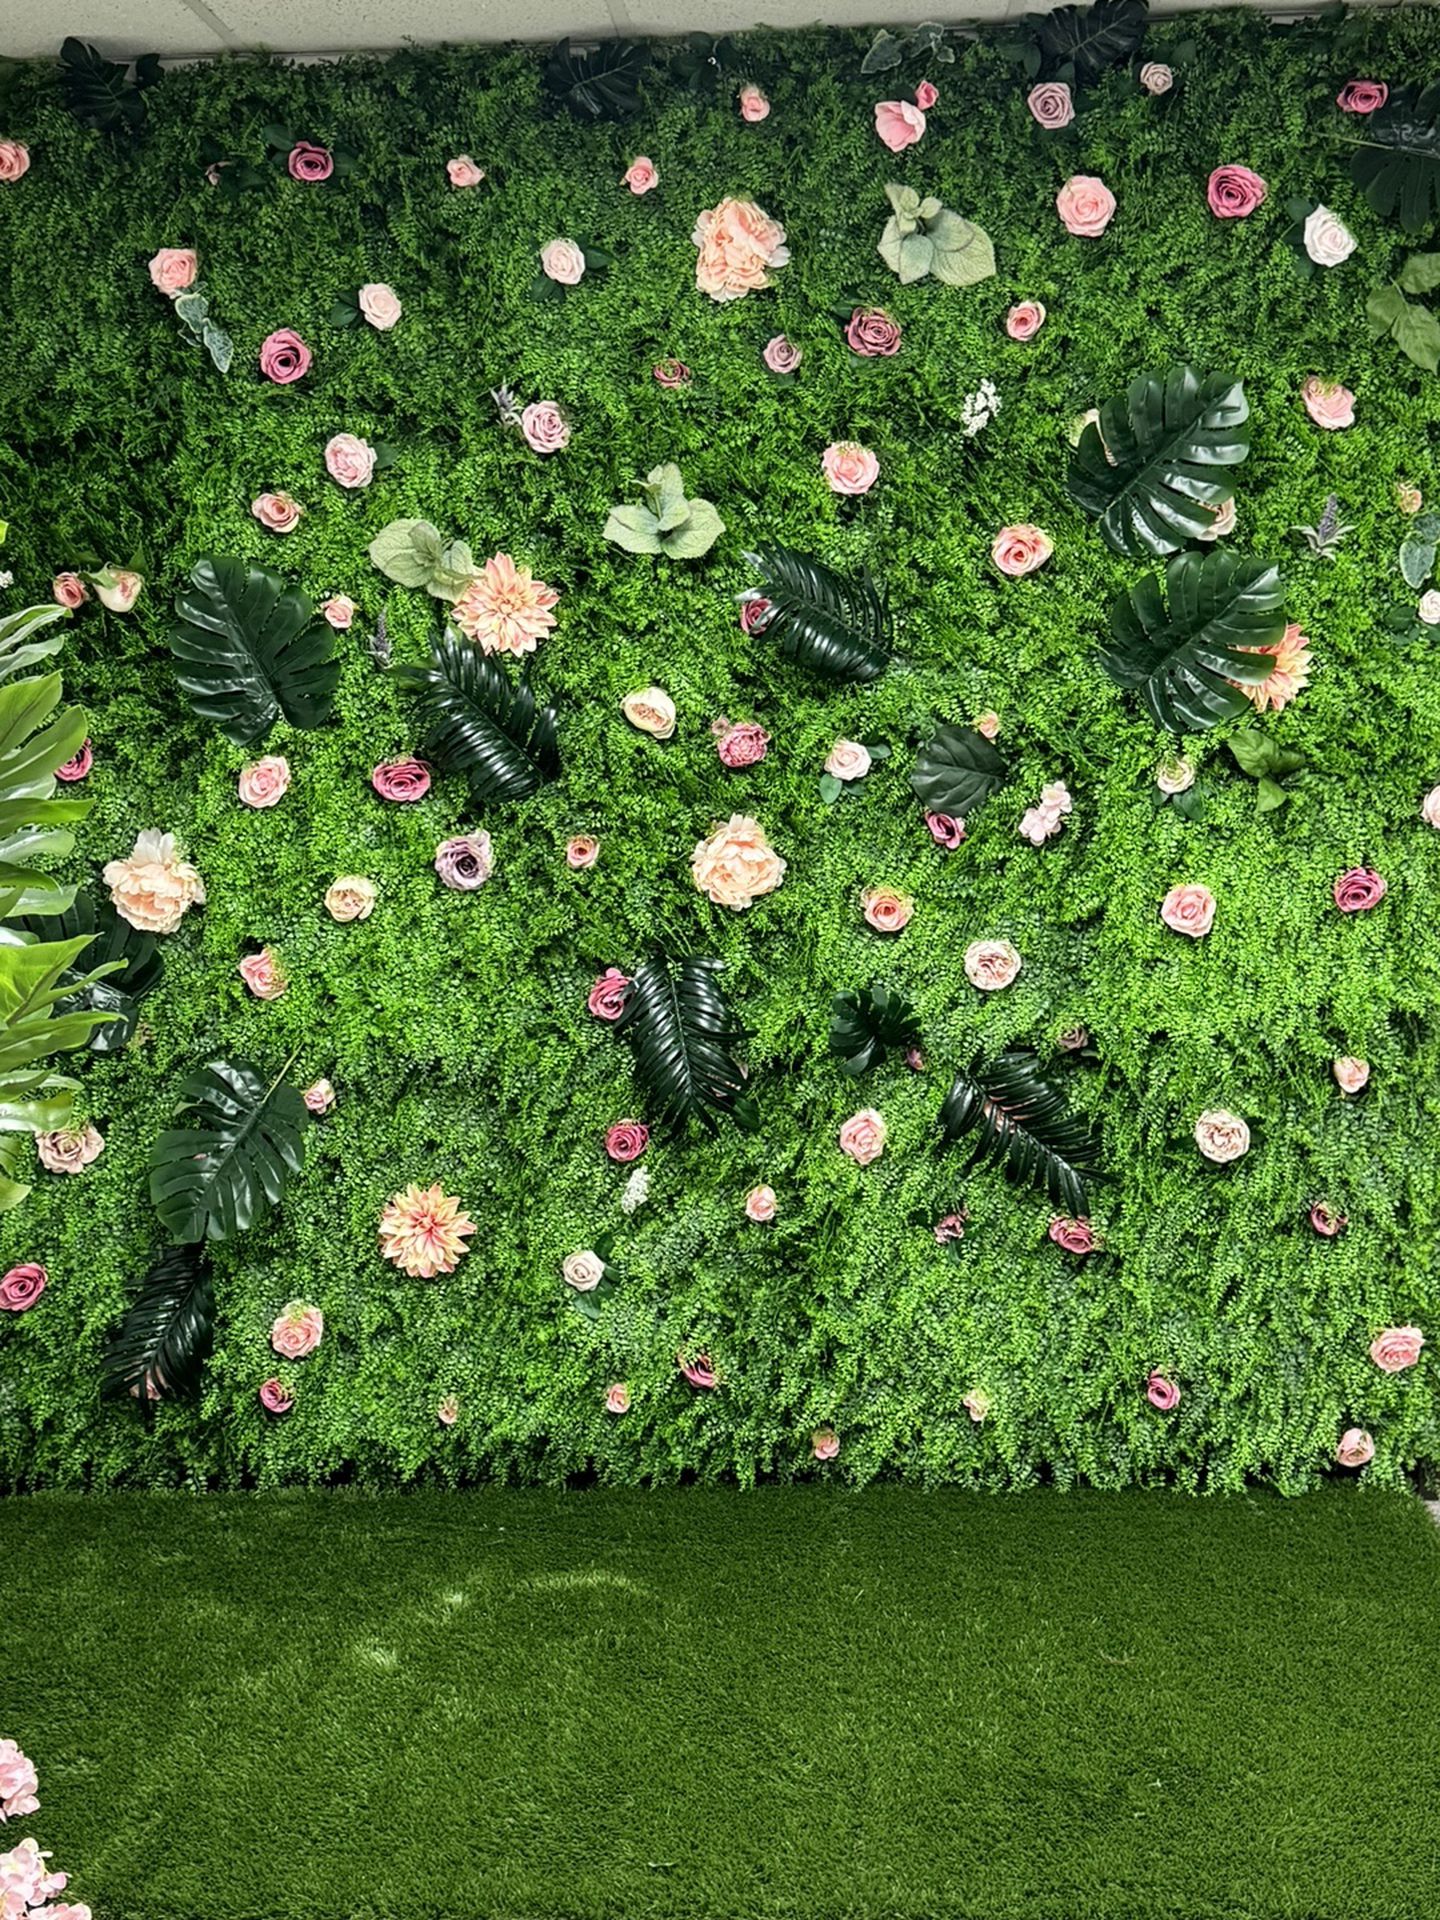 Artificial Flower Wall backdrop + Artificial grass turf (Read description for detail)